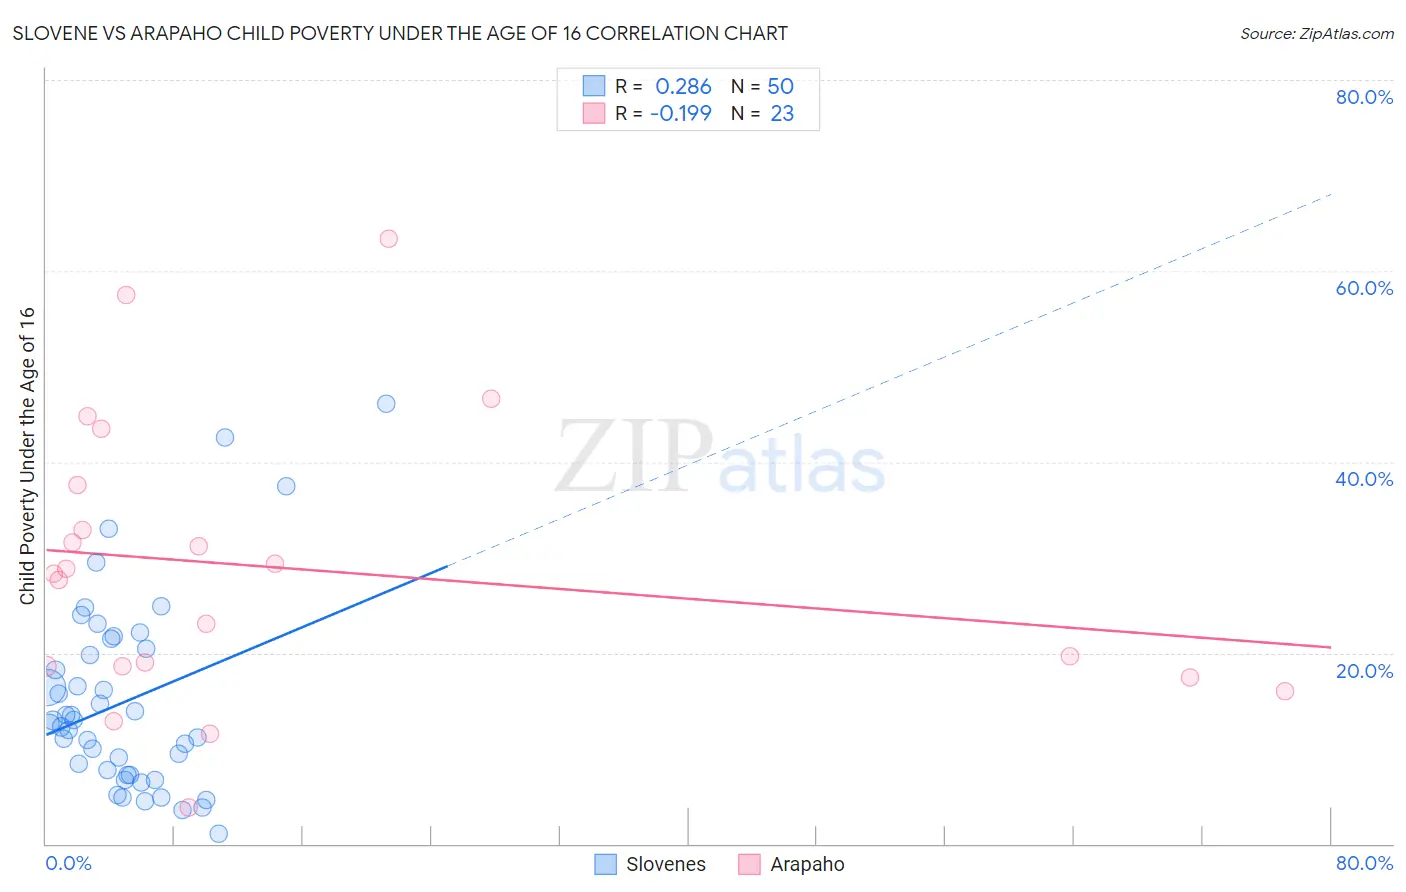 Slovene vs Arapaho Child Poverty Under the Age of 16